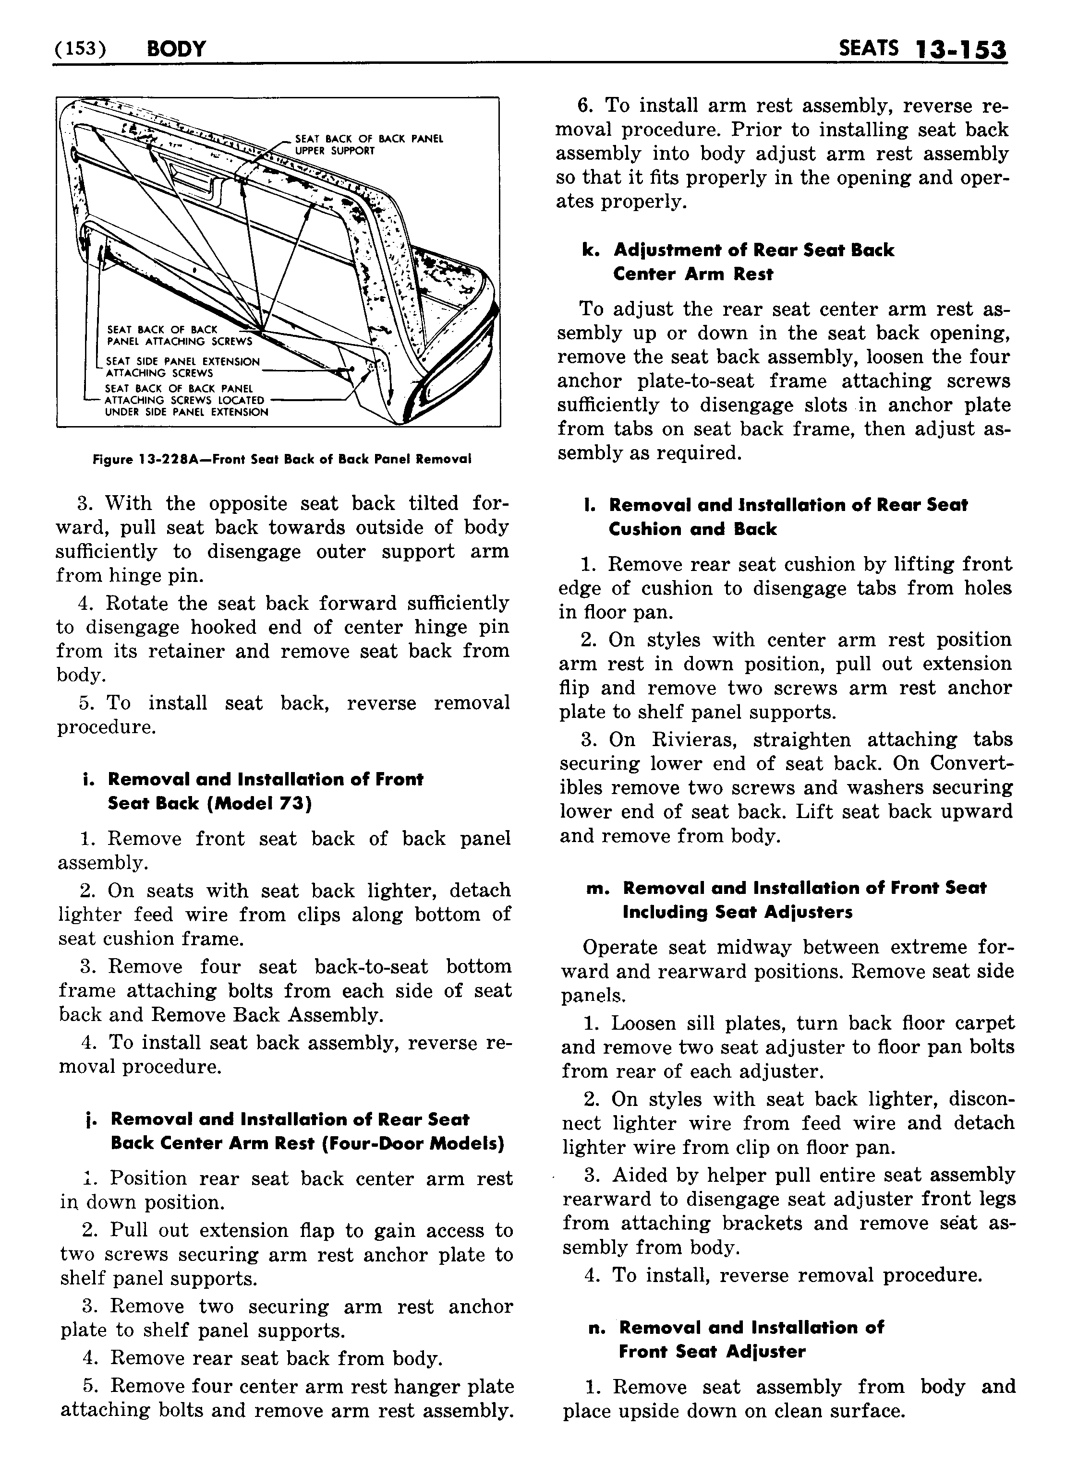 n_1957 Buick Body Service Manual-155-155.jpg